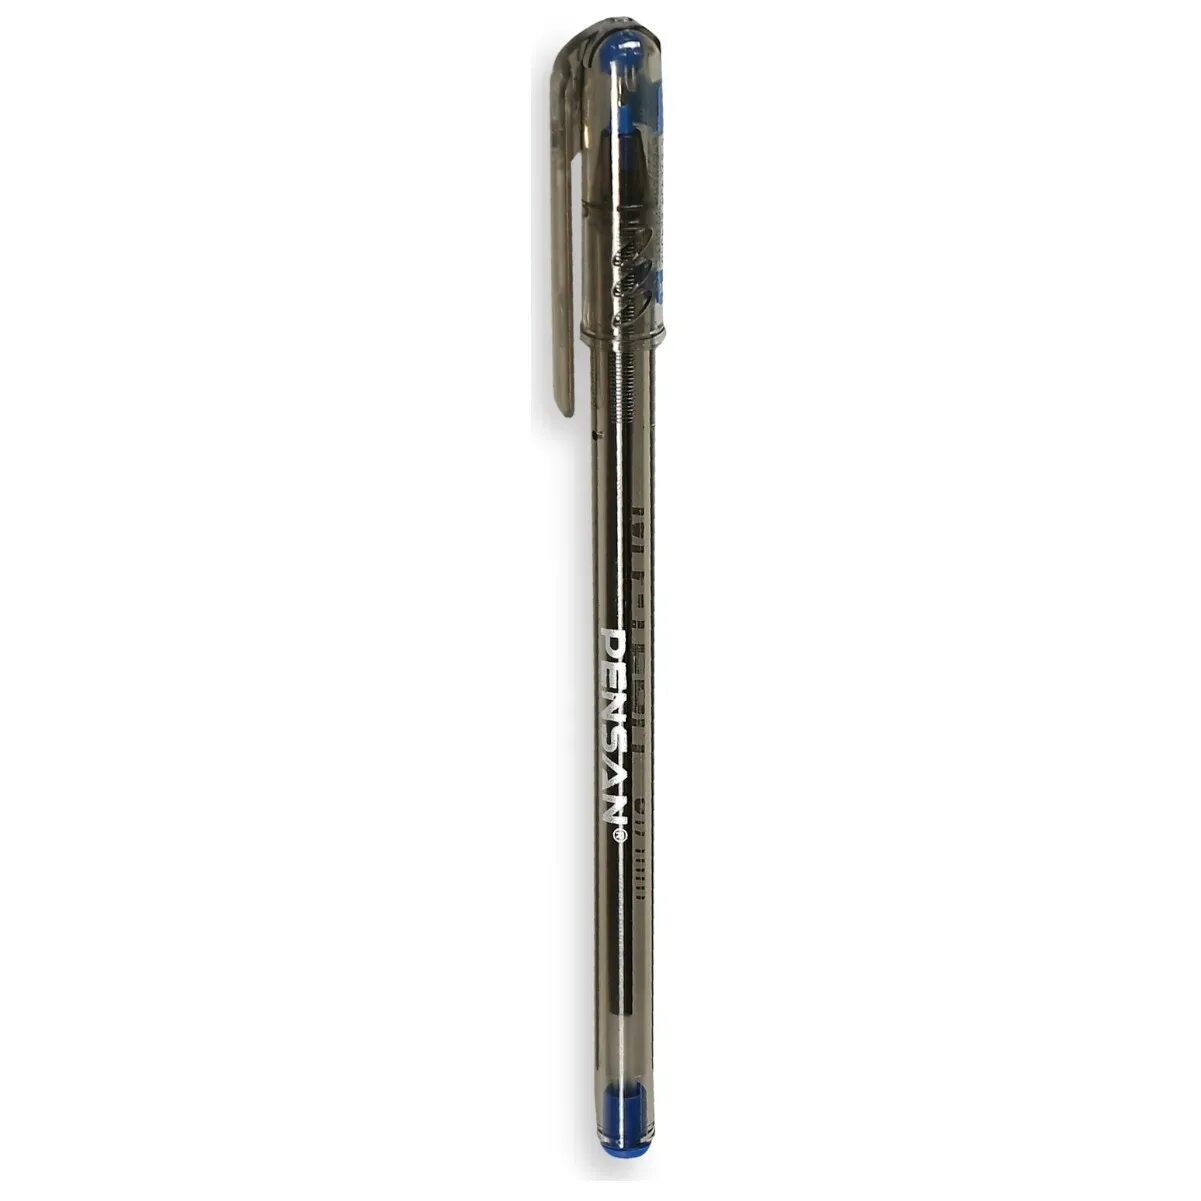 Ручка Pensan my-Tech 0.7mm. Pensan my Tech 0.7. Pensan ручка шариковая my Tech 0.7 мм, 2240. Ручка шариковая неавтоматическая my Tech игольчат након 0,7мм,Лин 0,35мм. Handle mine